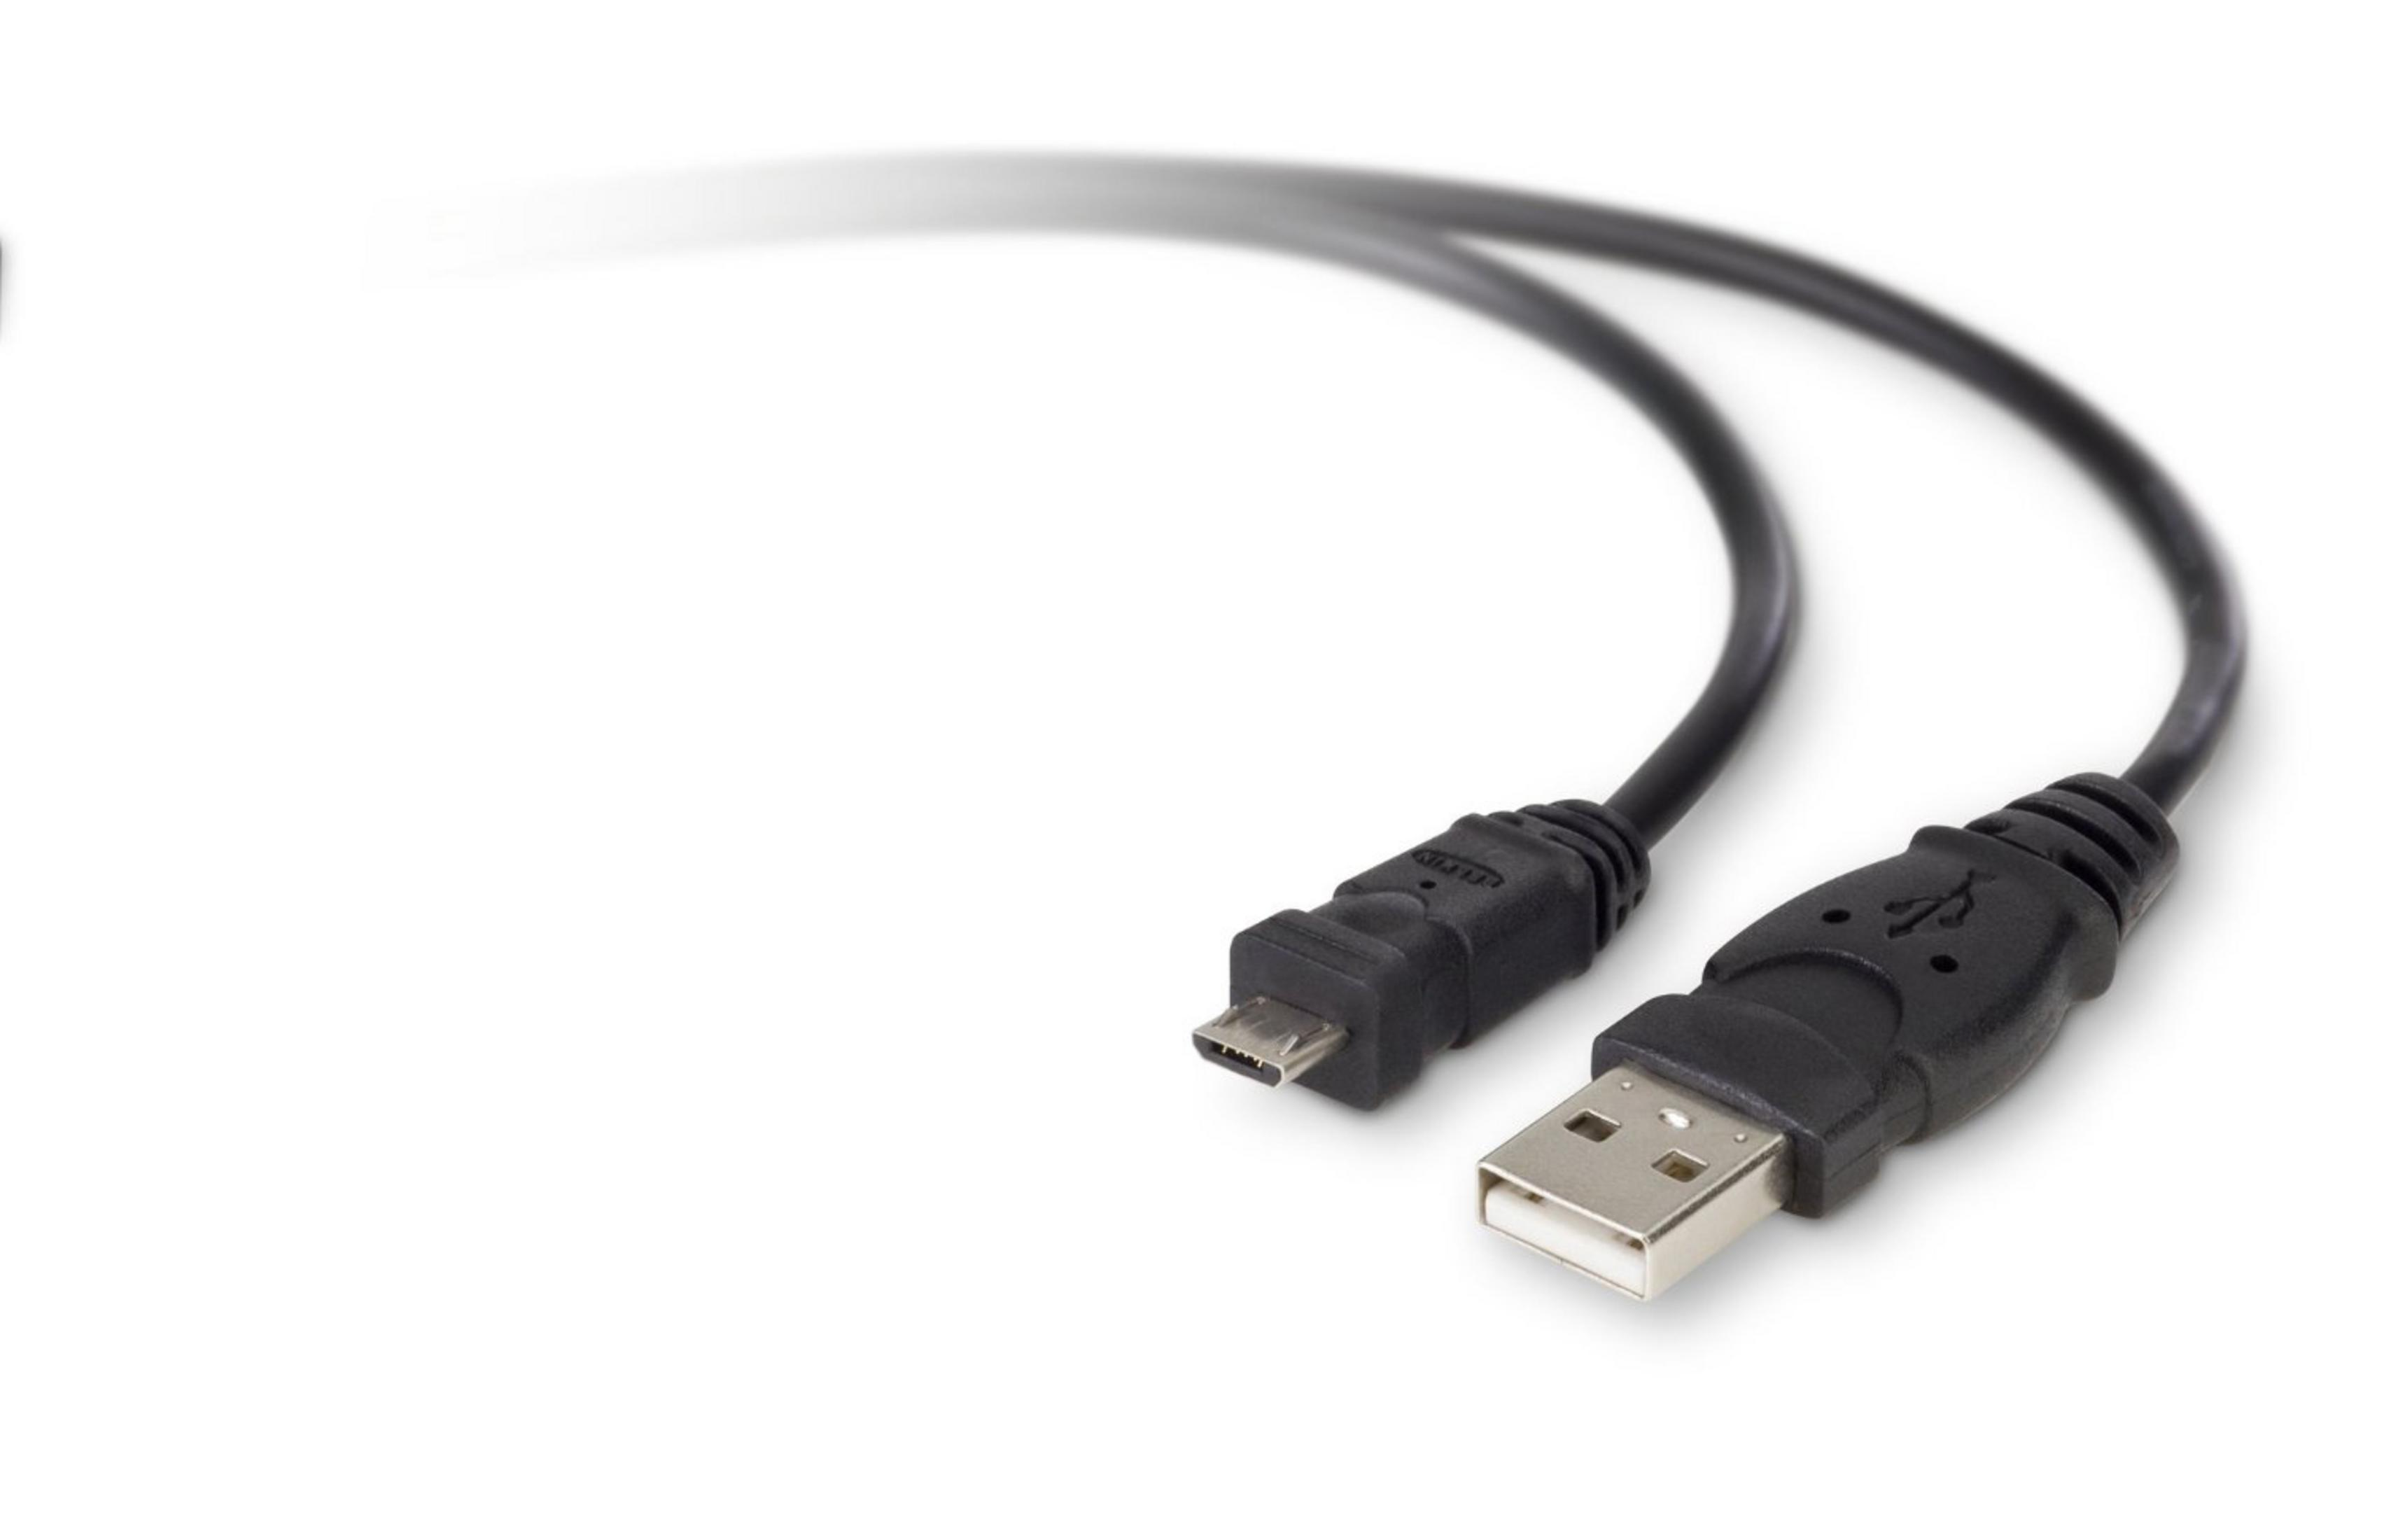 BELKIN Verbindungskabel KABEL F3U151CP0.9M-P USB-A 0,9M PRO MICRO-B